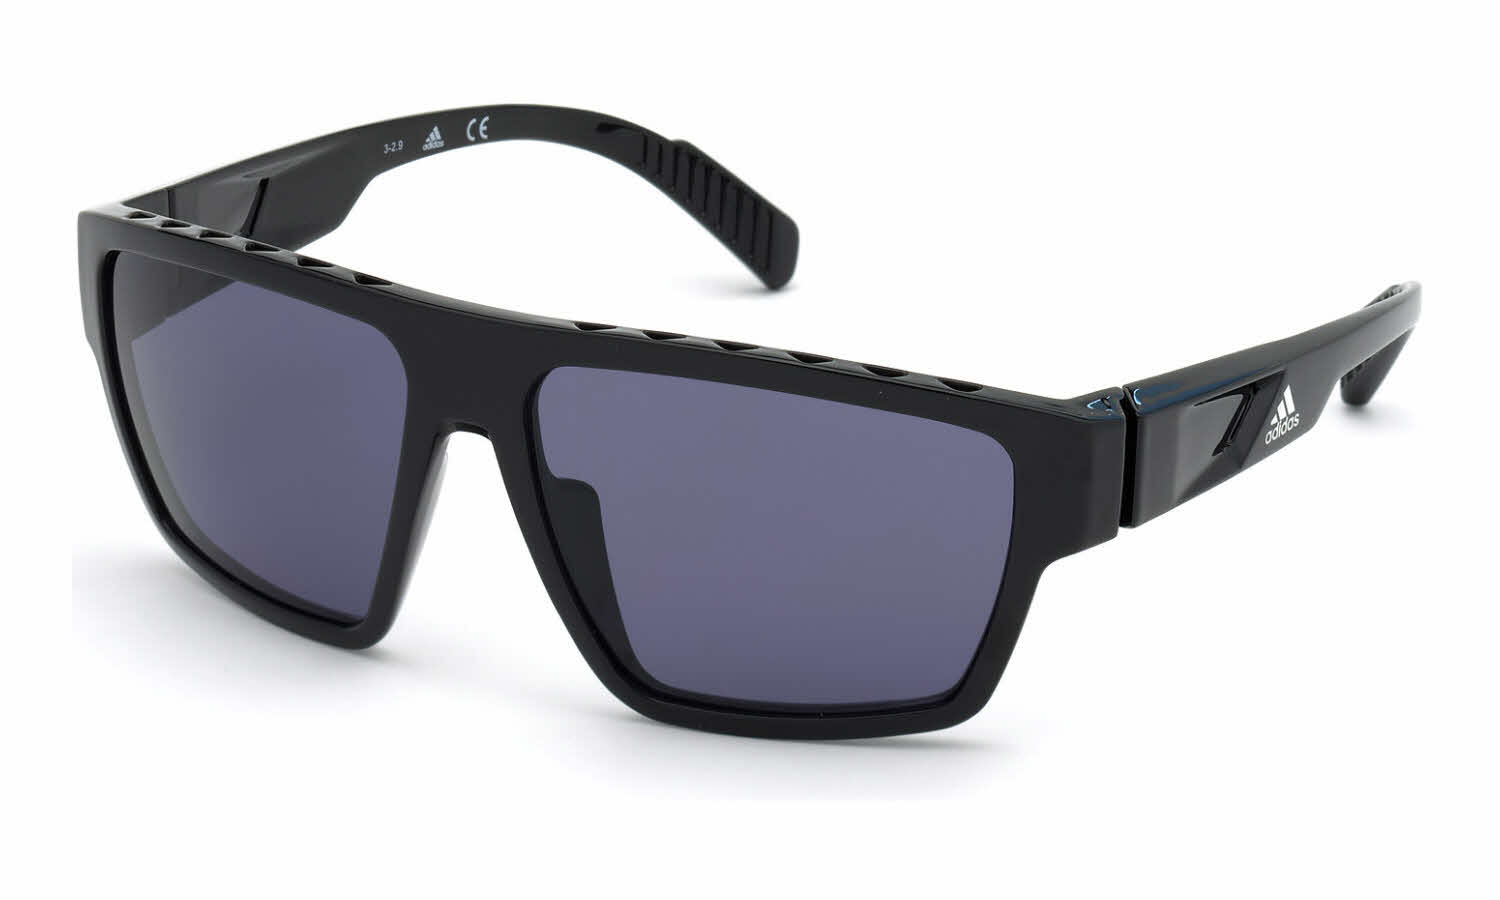 Adidas SP0008 Sunglasses